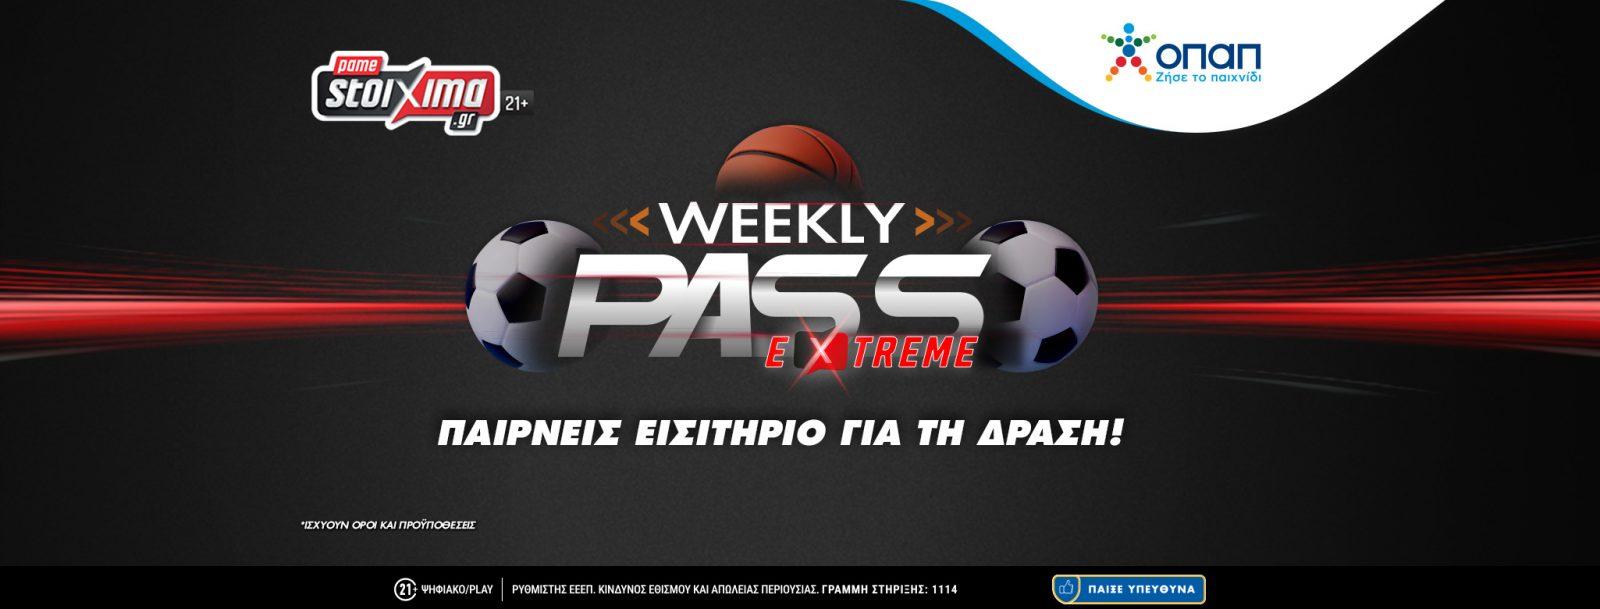 Premier League: Τσέλσι-Λίβερπουλ στο Pamestoixima.gr με ενισχυμένη απόδοση** στο τελικό αποτέλεσμα!